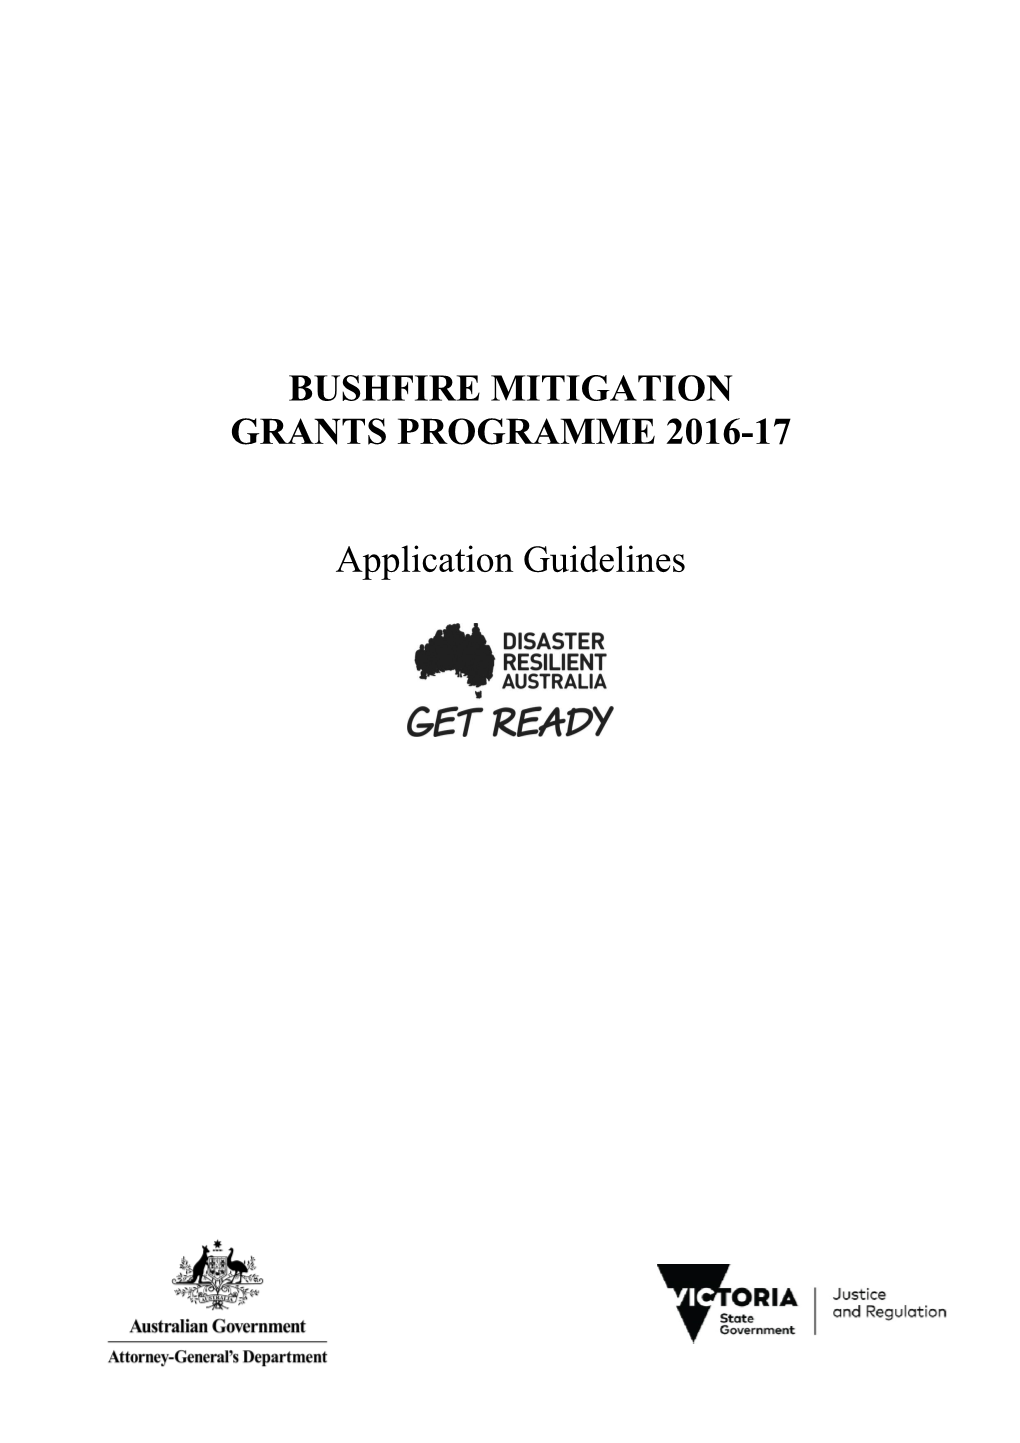 Bushfire Mitigation Grantsprogramme 2016-17